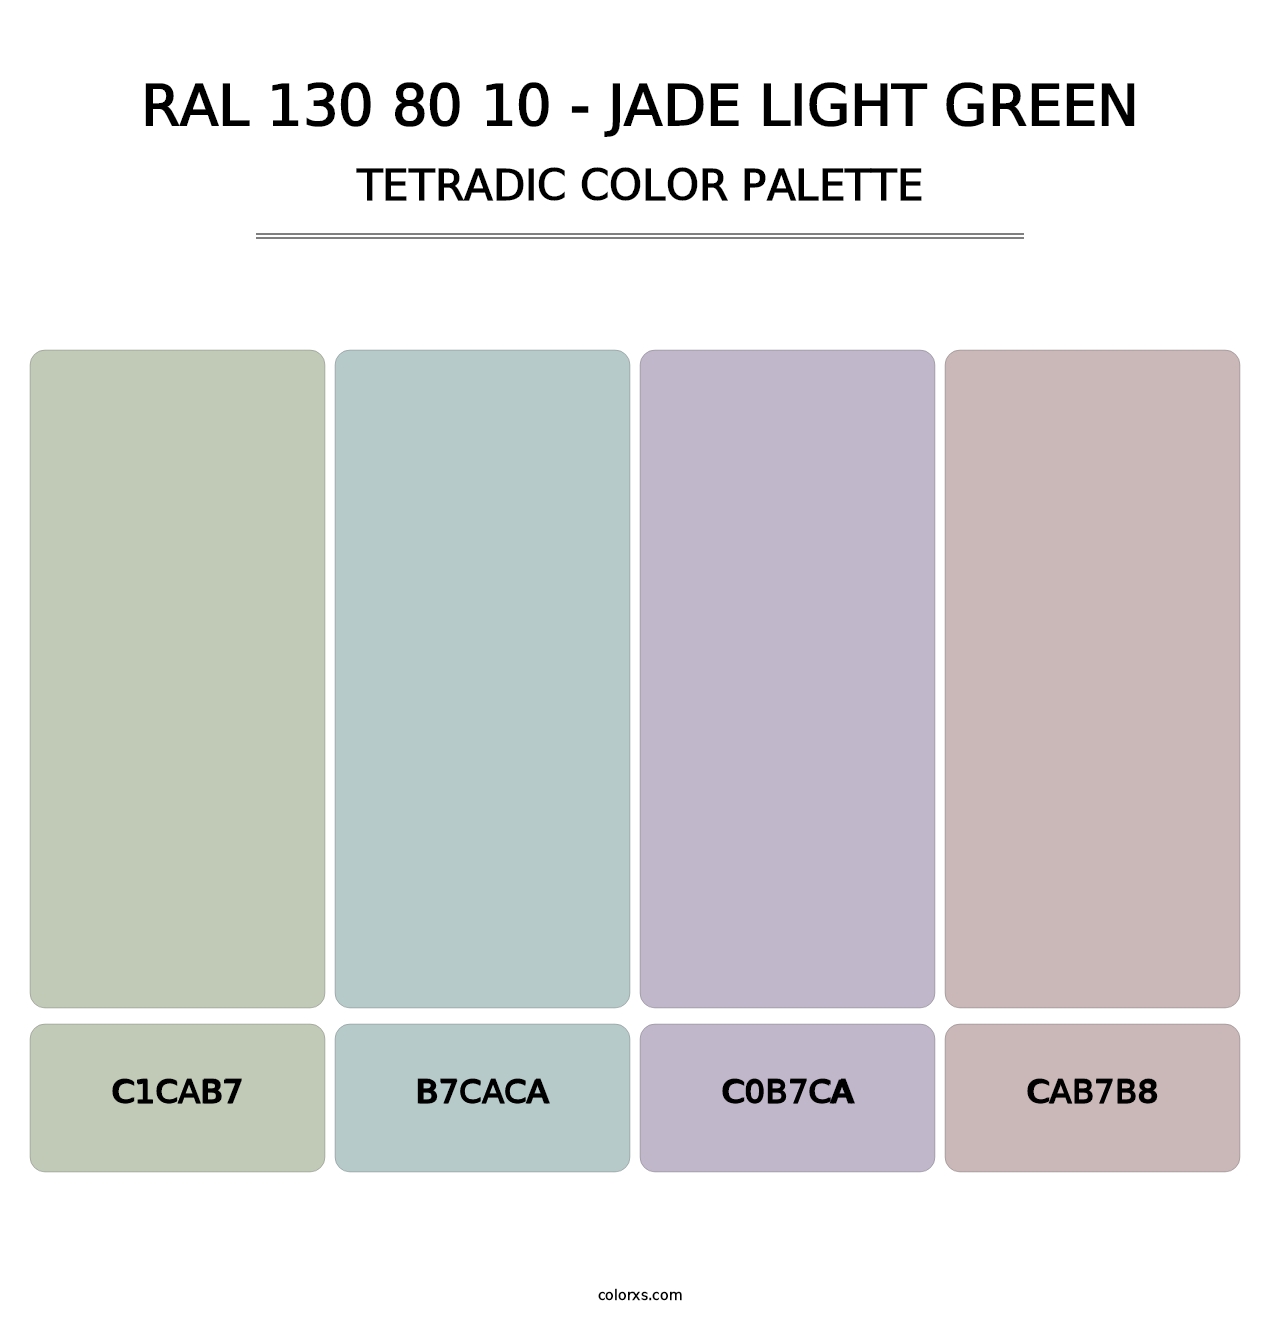 RAL 130 80 10 - Jade Light Green - Tetradic Color Palette